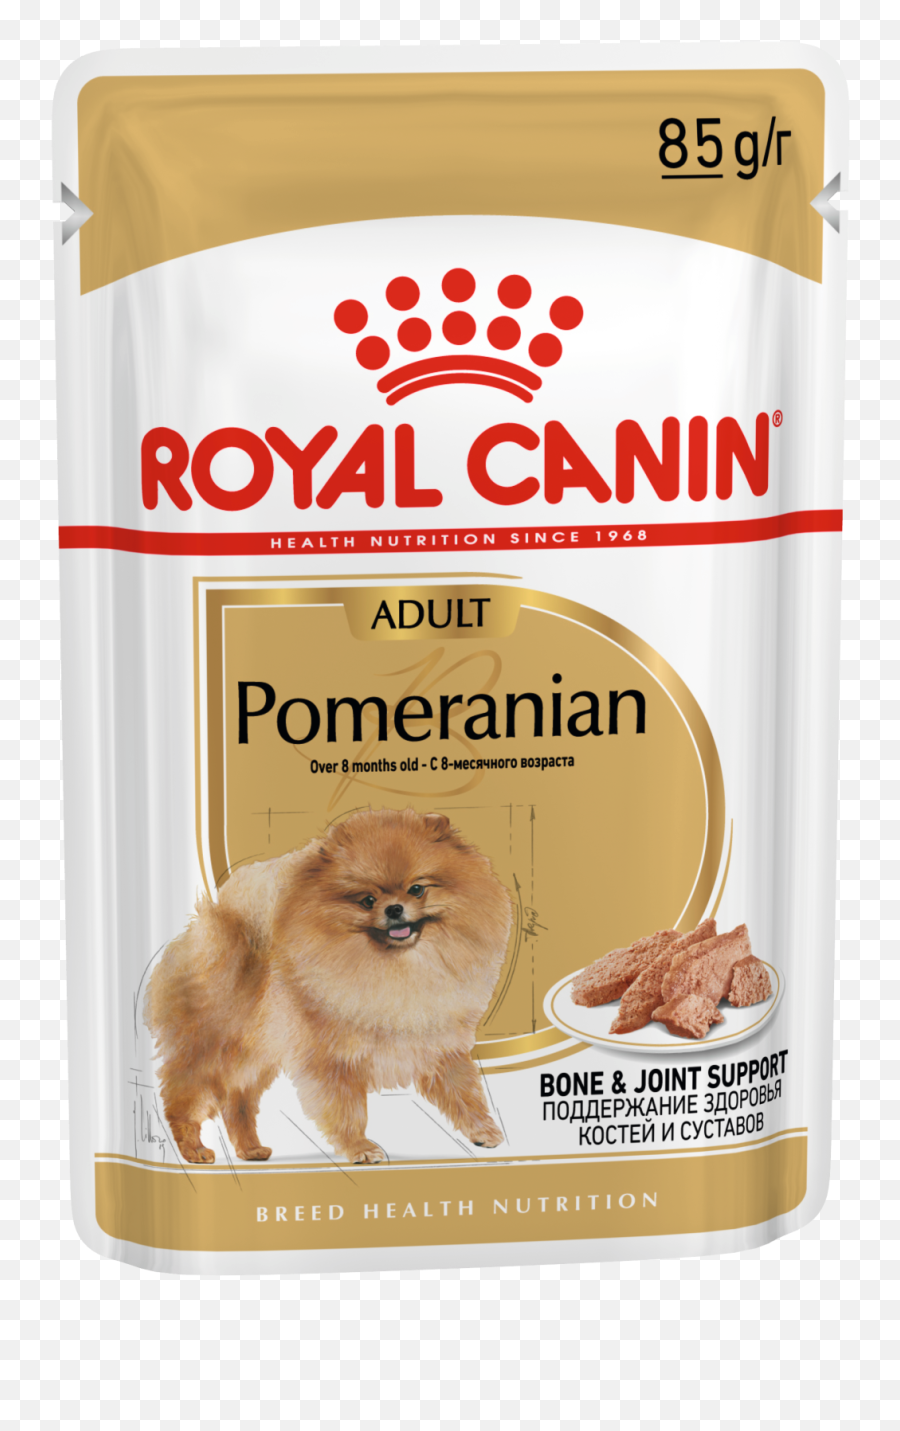 Pomeranian Wet - Royal Canin Emoji,Pomeranian Png